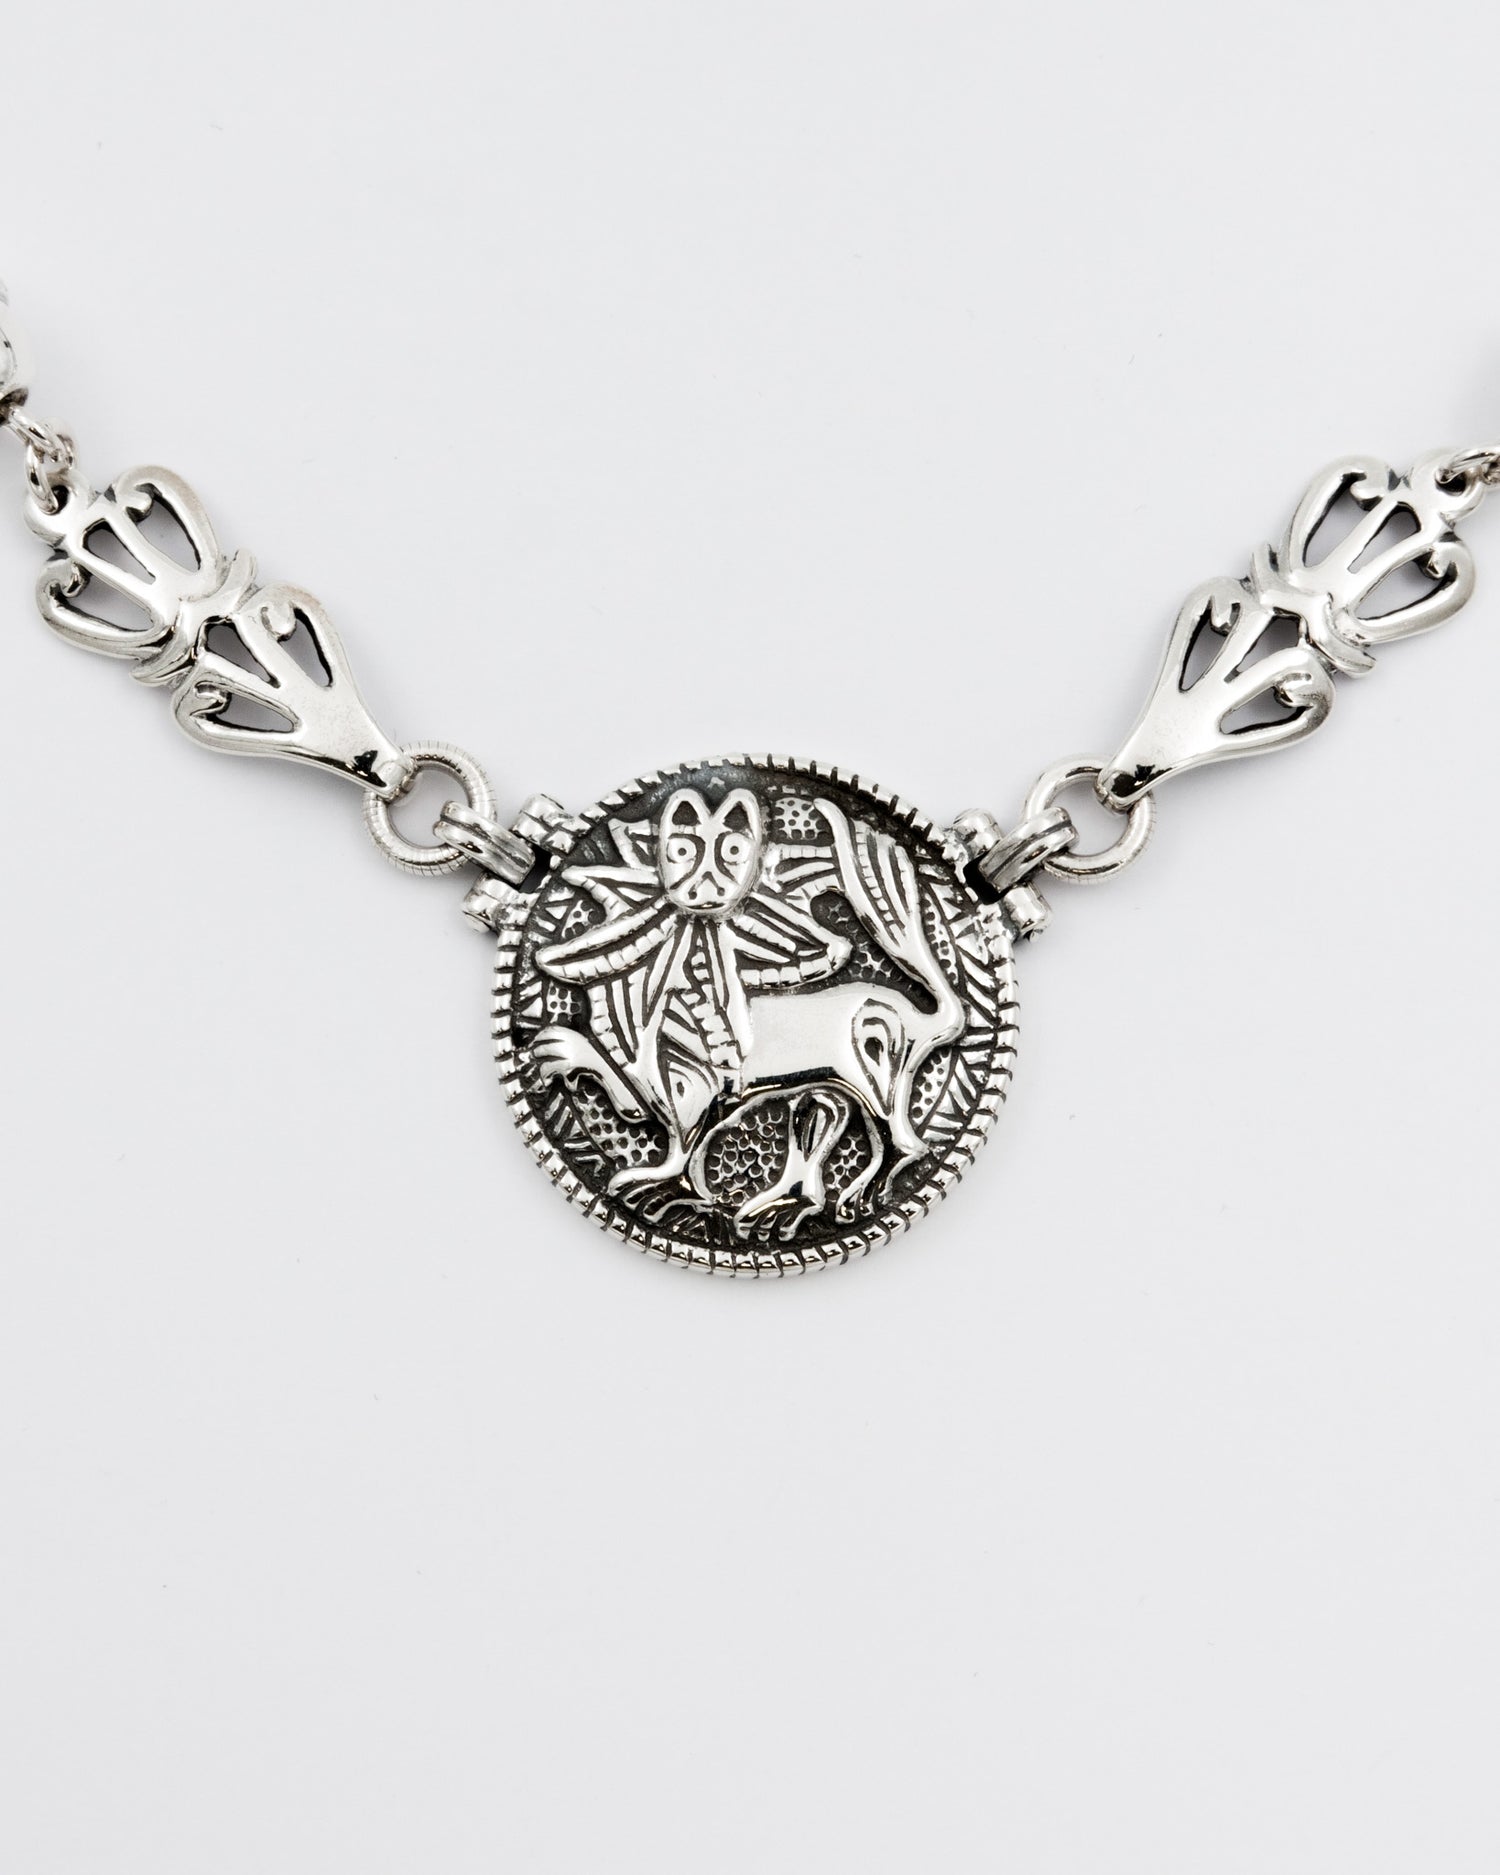 Kept Aurinkoleijona necklace 45 cm small silver